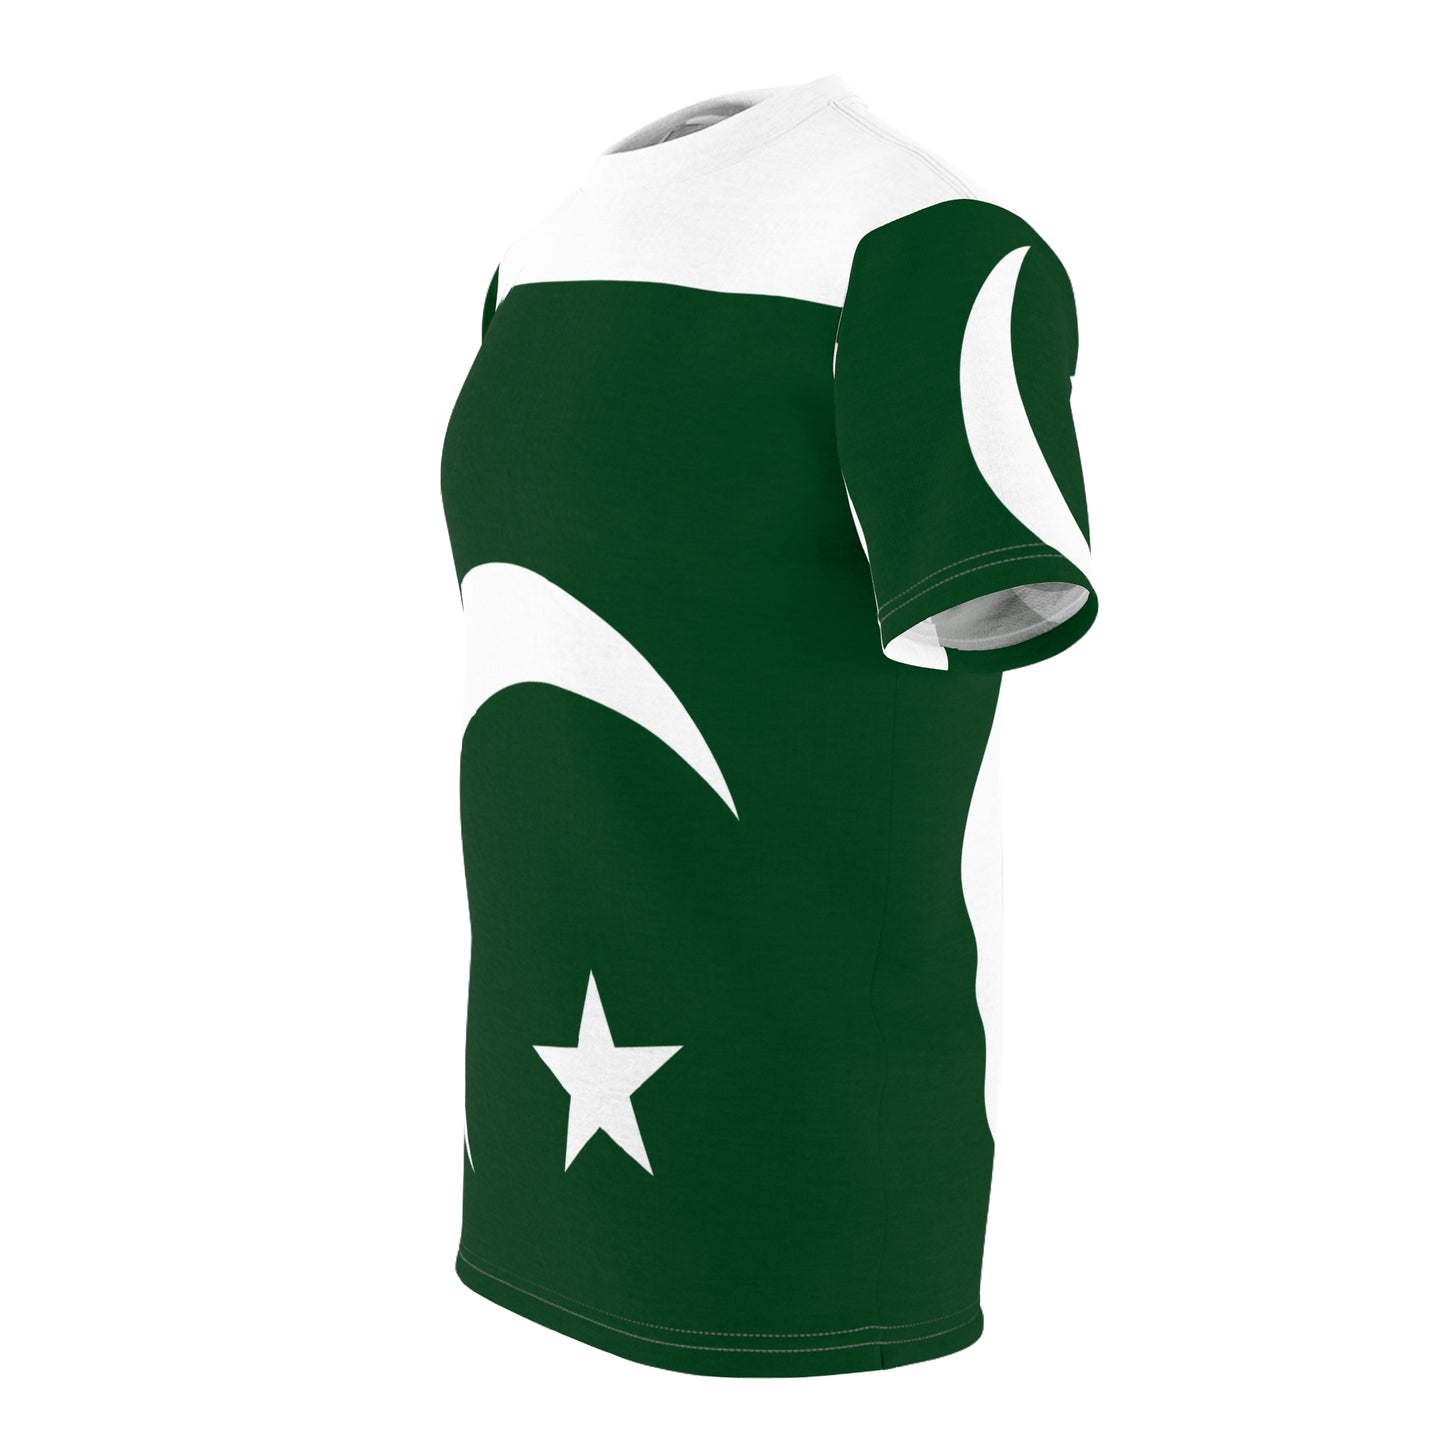 Pakistan Flag  - International Country Flag Unisex Tee